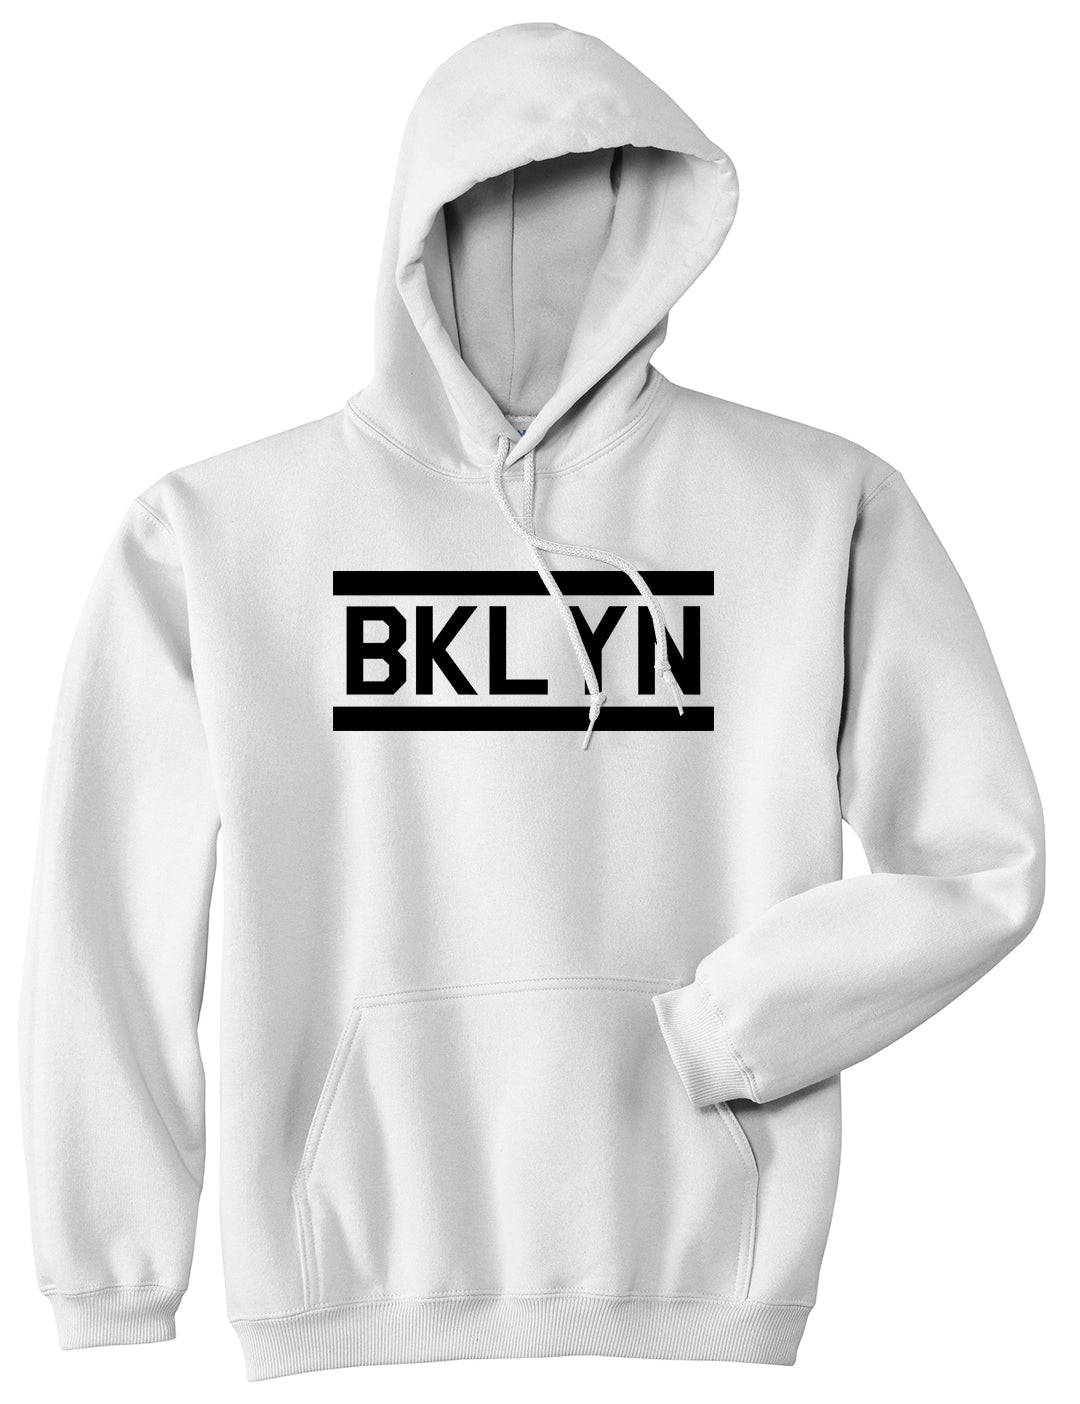 BKLYN Brooklyn Mens Pullover Hoodie White by Kings Of NY